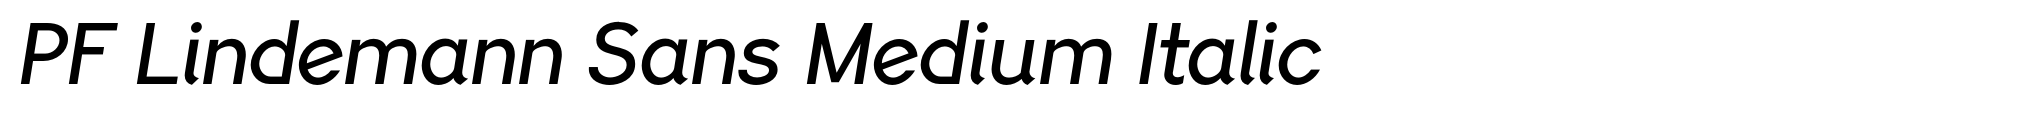 PF Lindemann Sans Medium Italic image